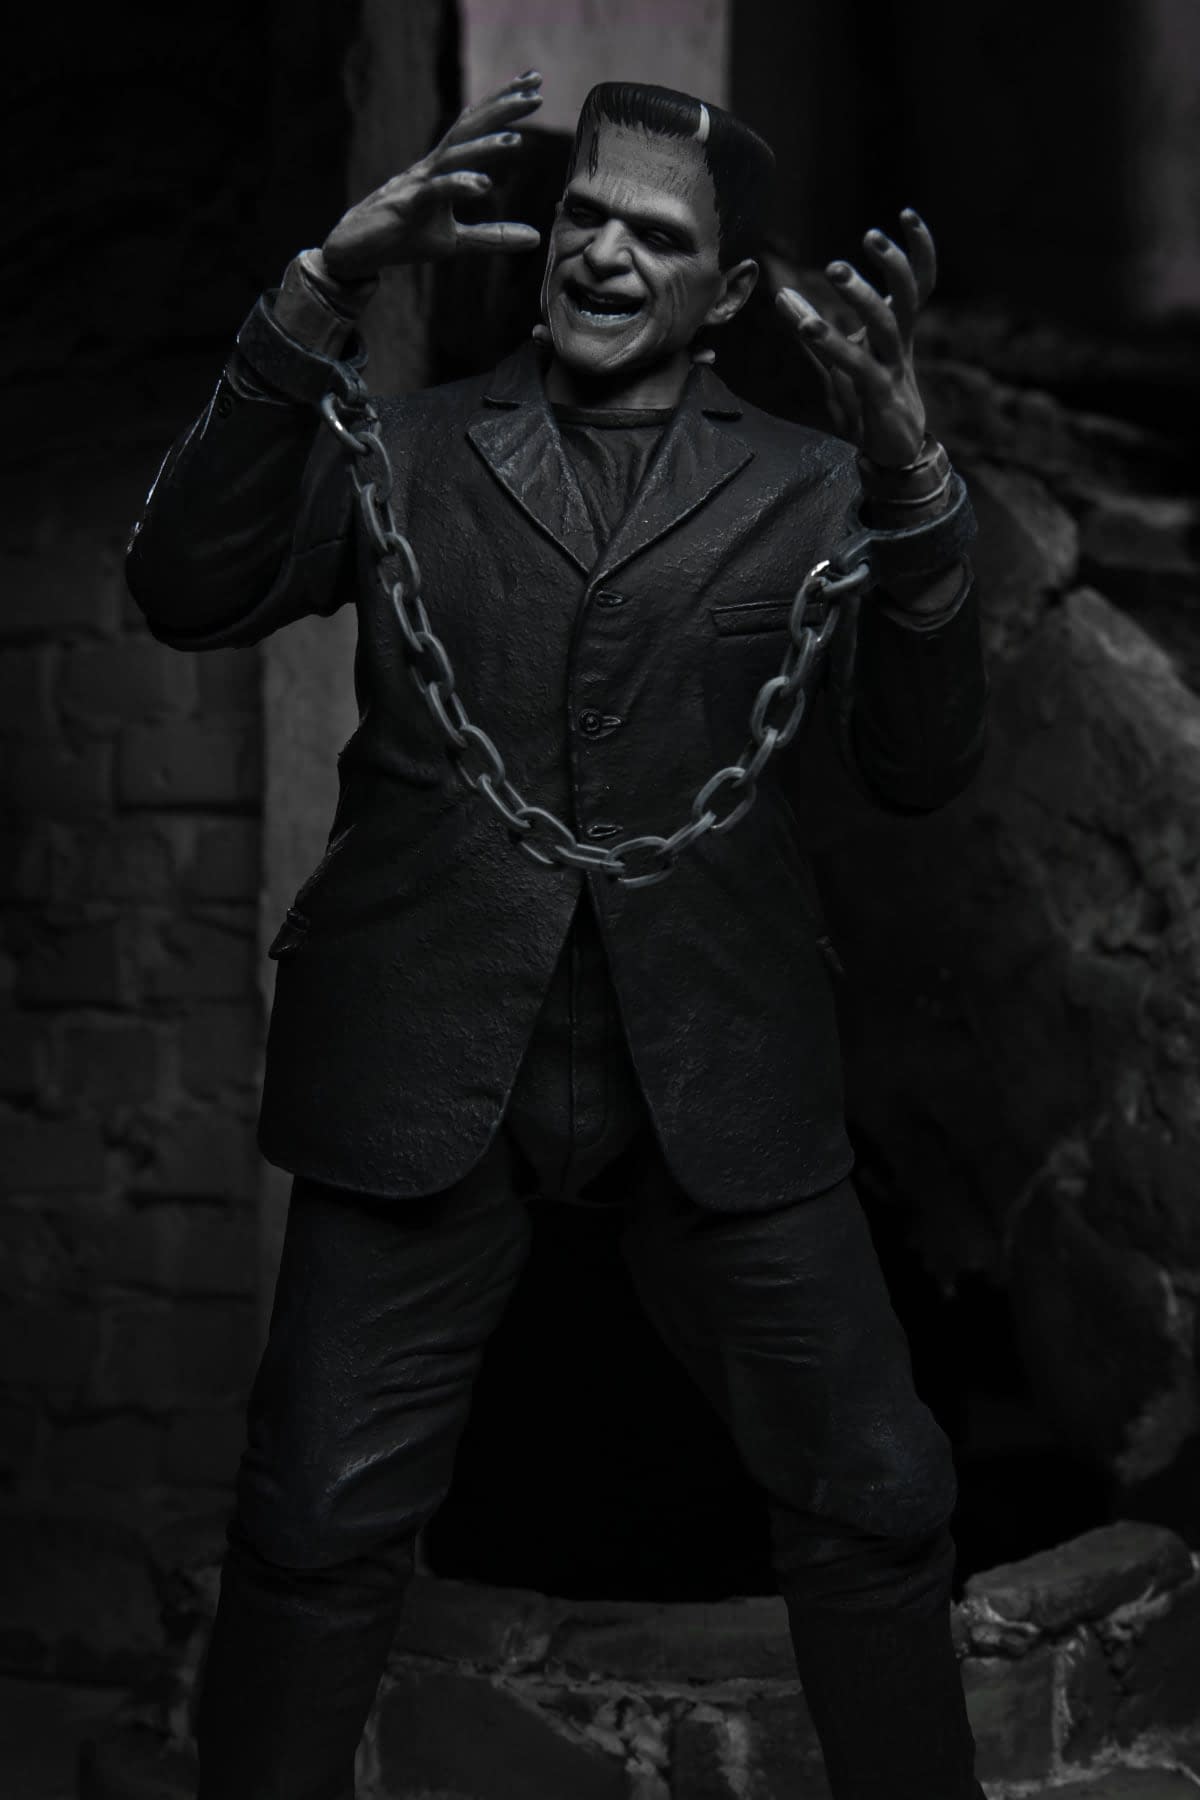 NECA Reveals Their Universal Monsters Ultimate Frankenstein Figure